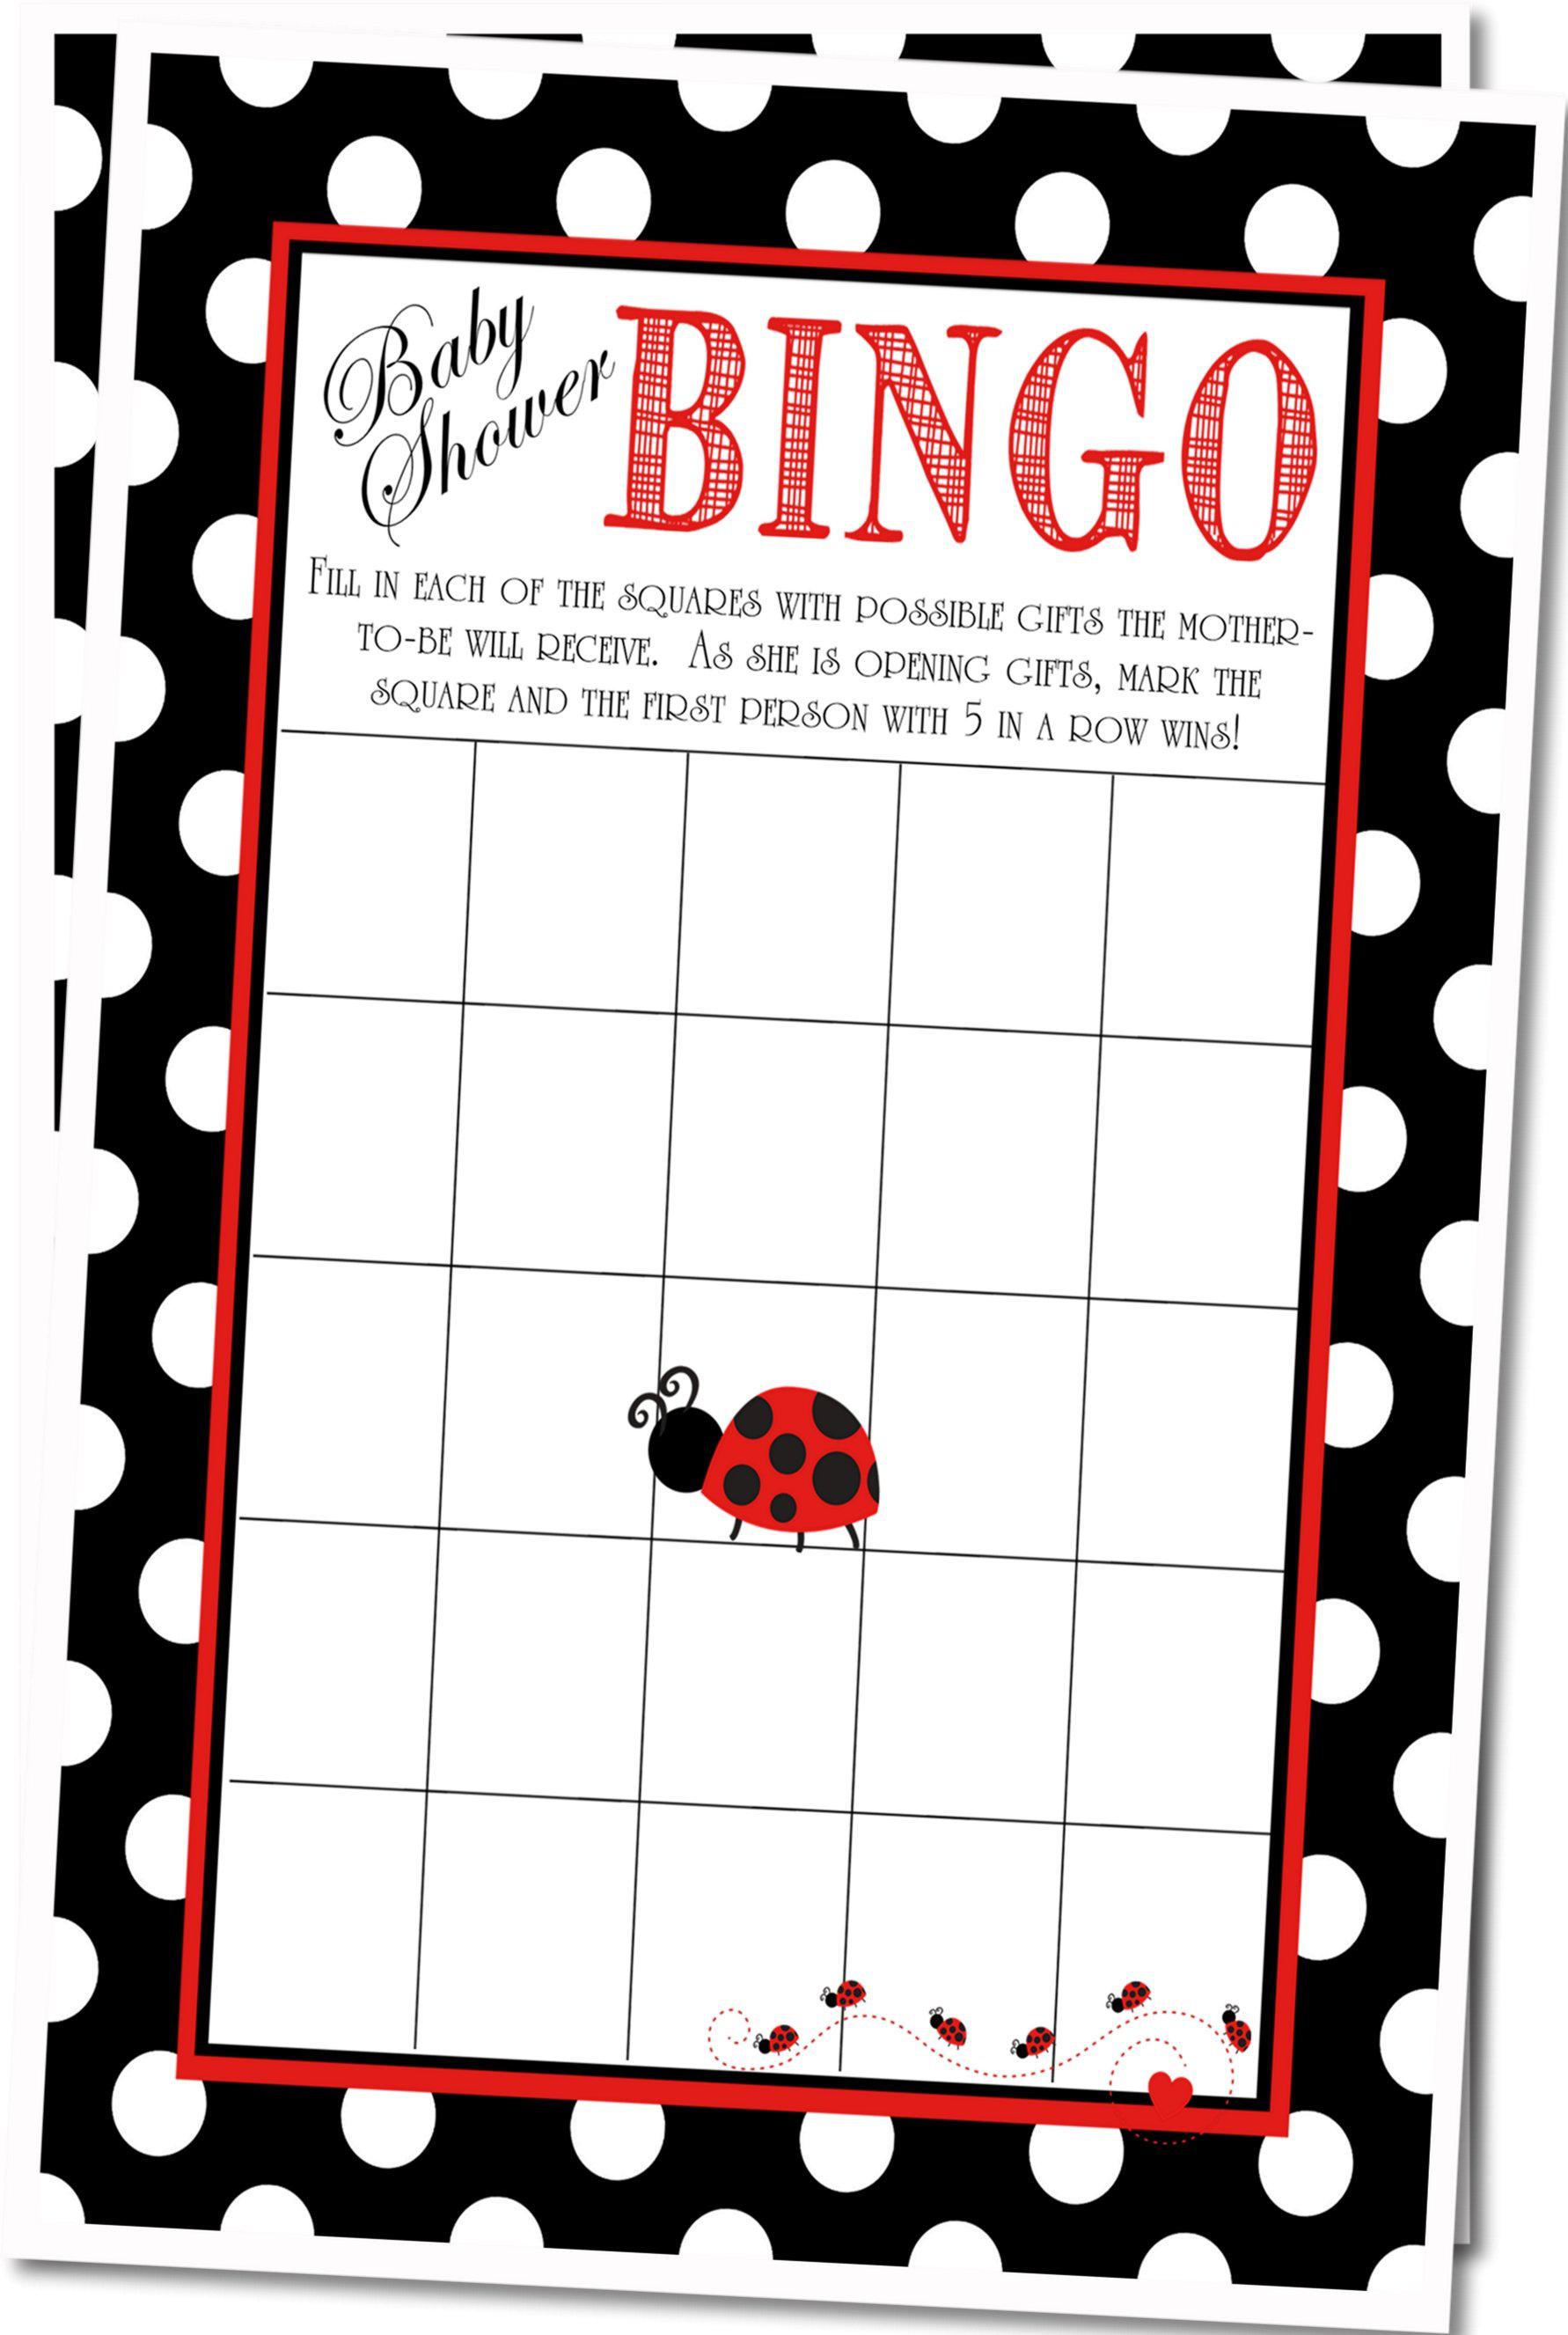 Ladybug Baby Shower Bingo Cards